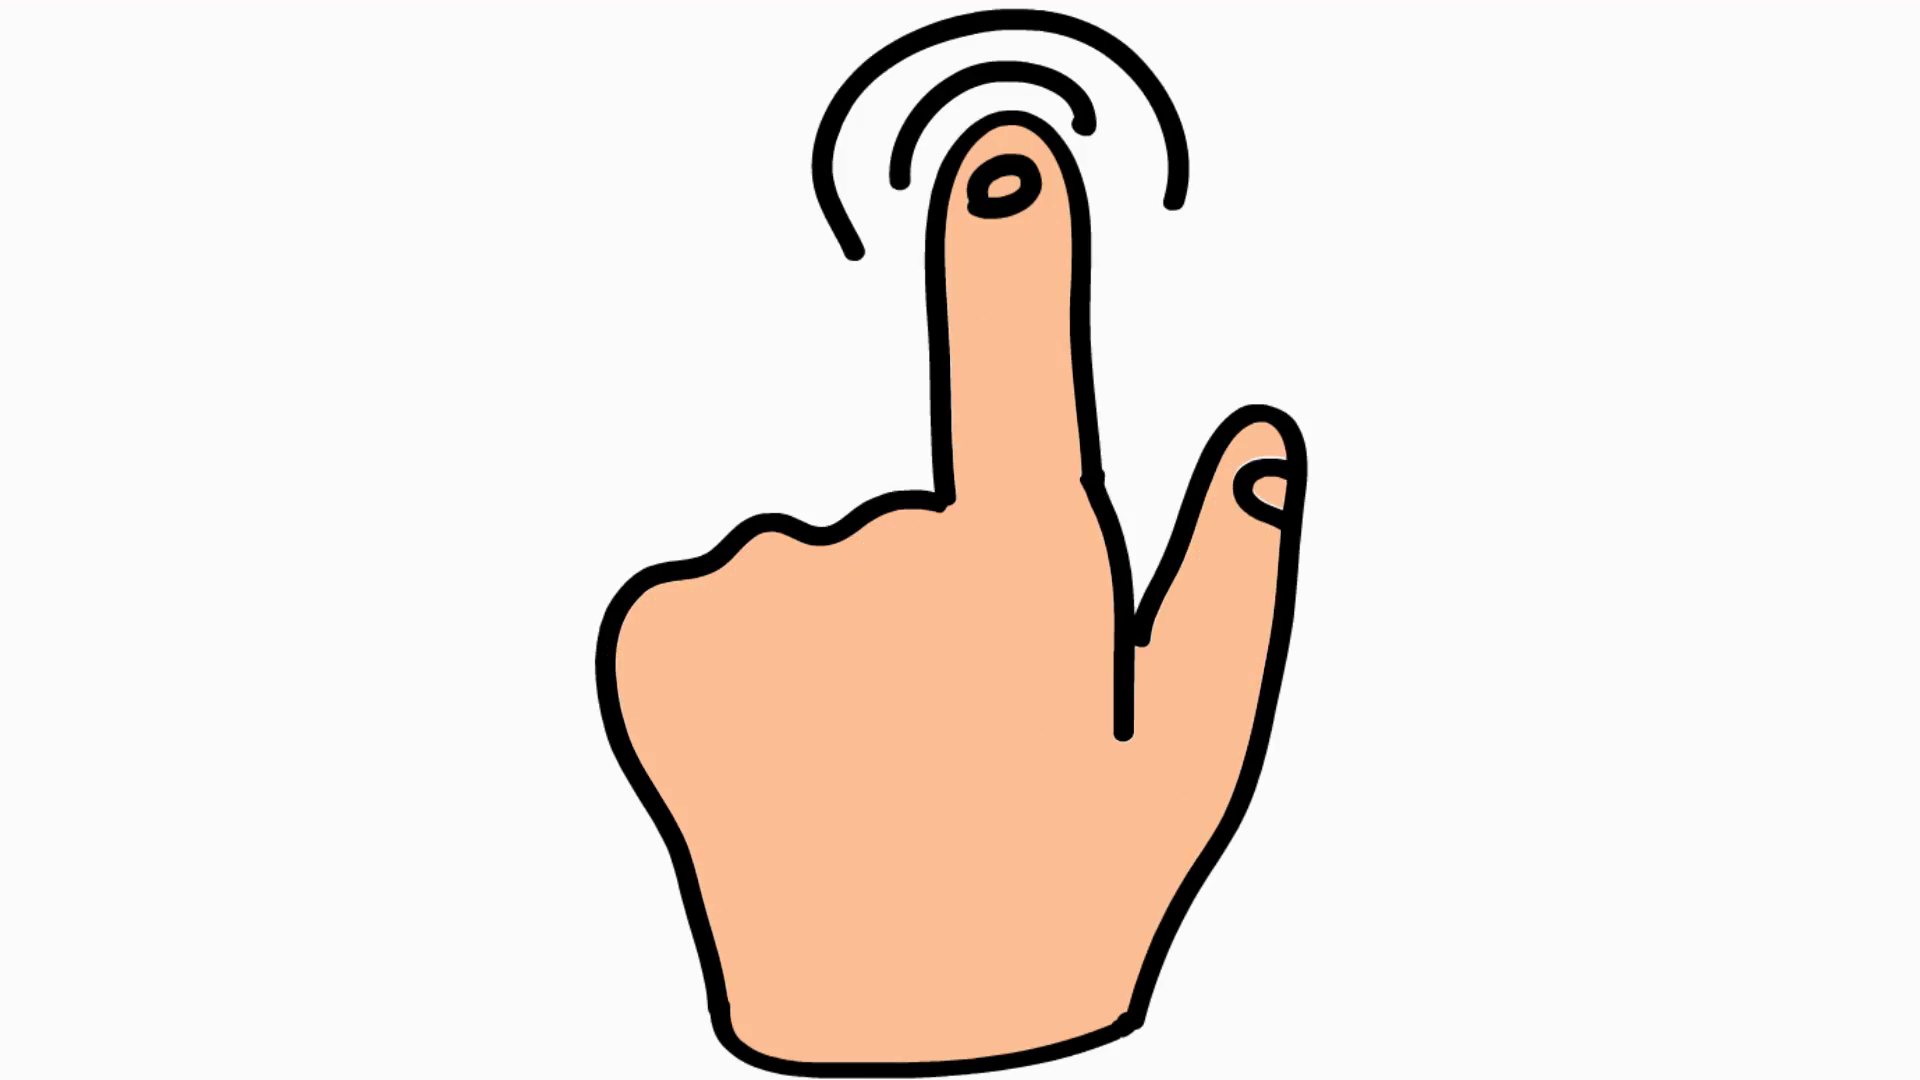 Finger Touch Vector Icon | Stock Vector | Colourbox